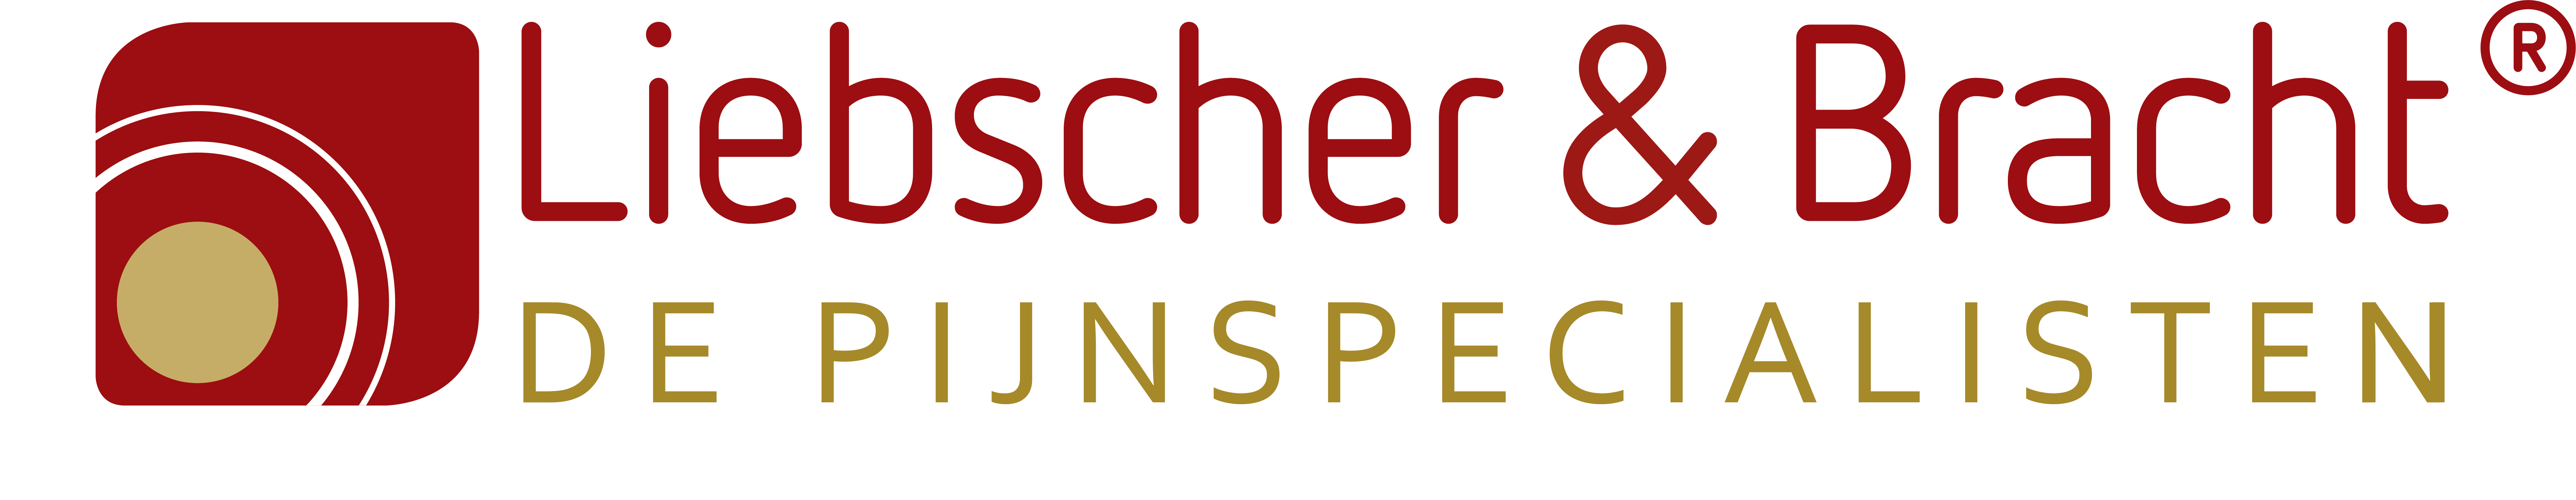 Liebscher & Bracht Partner